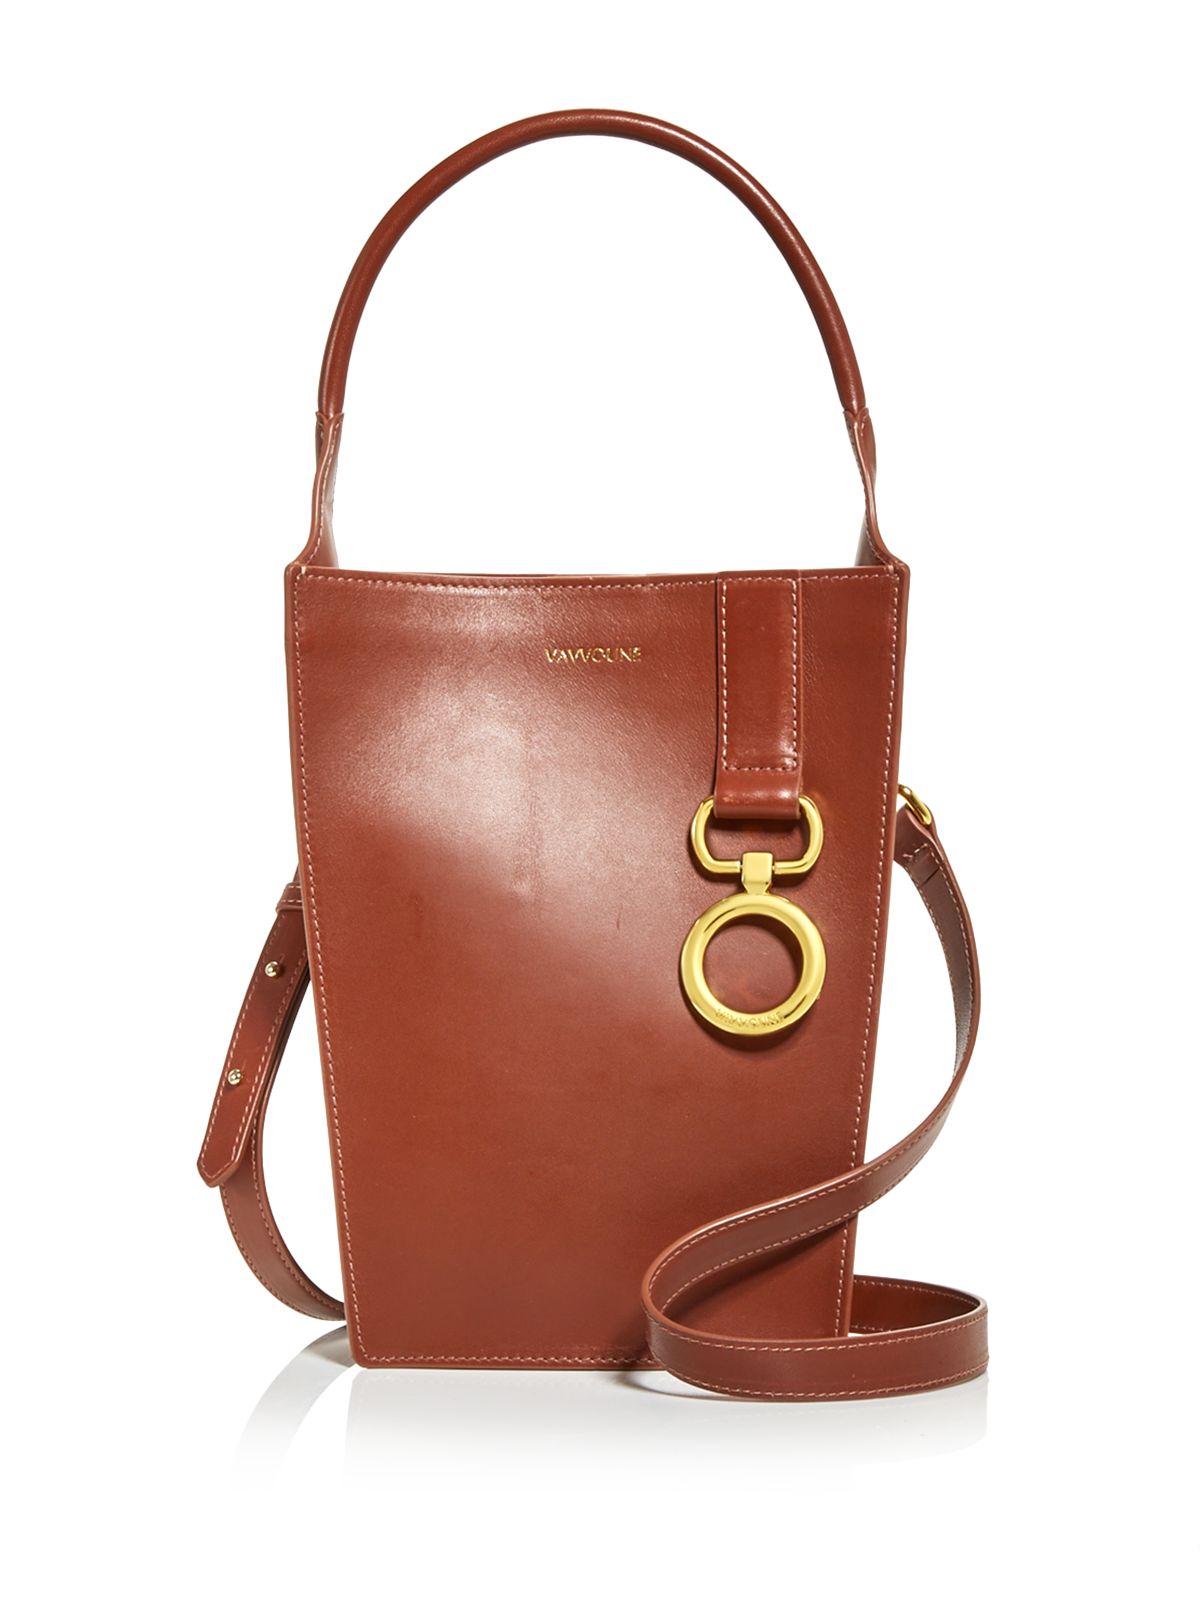 VAVVOUNE Women's Brown Solid Single Strap Crossbody Handbag Purse